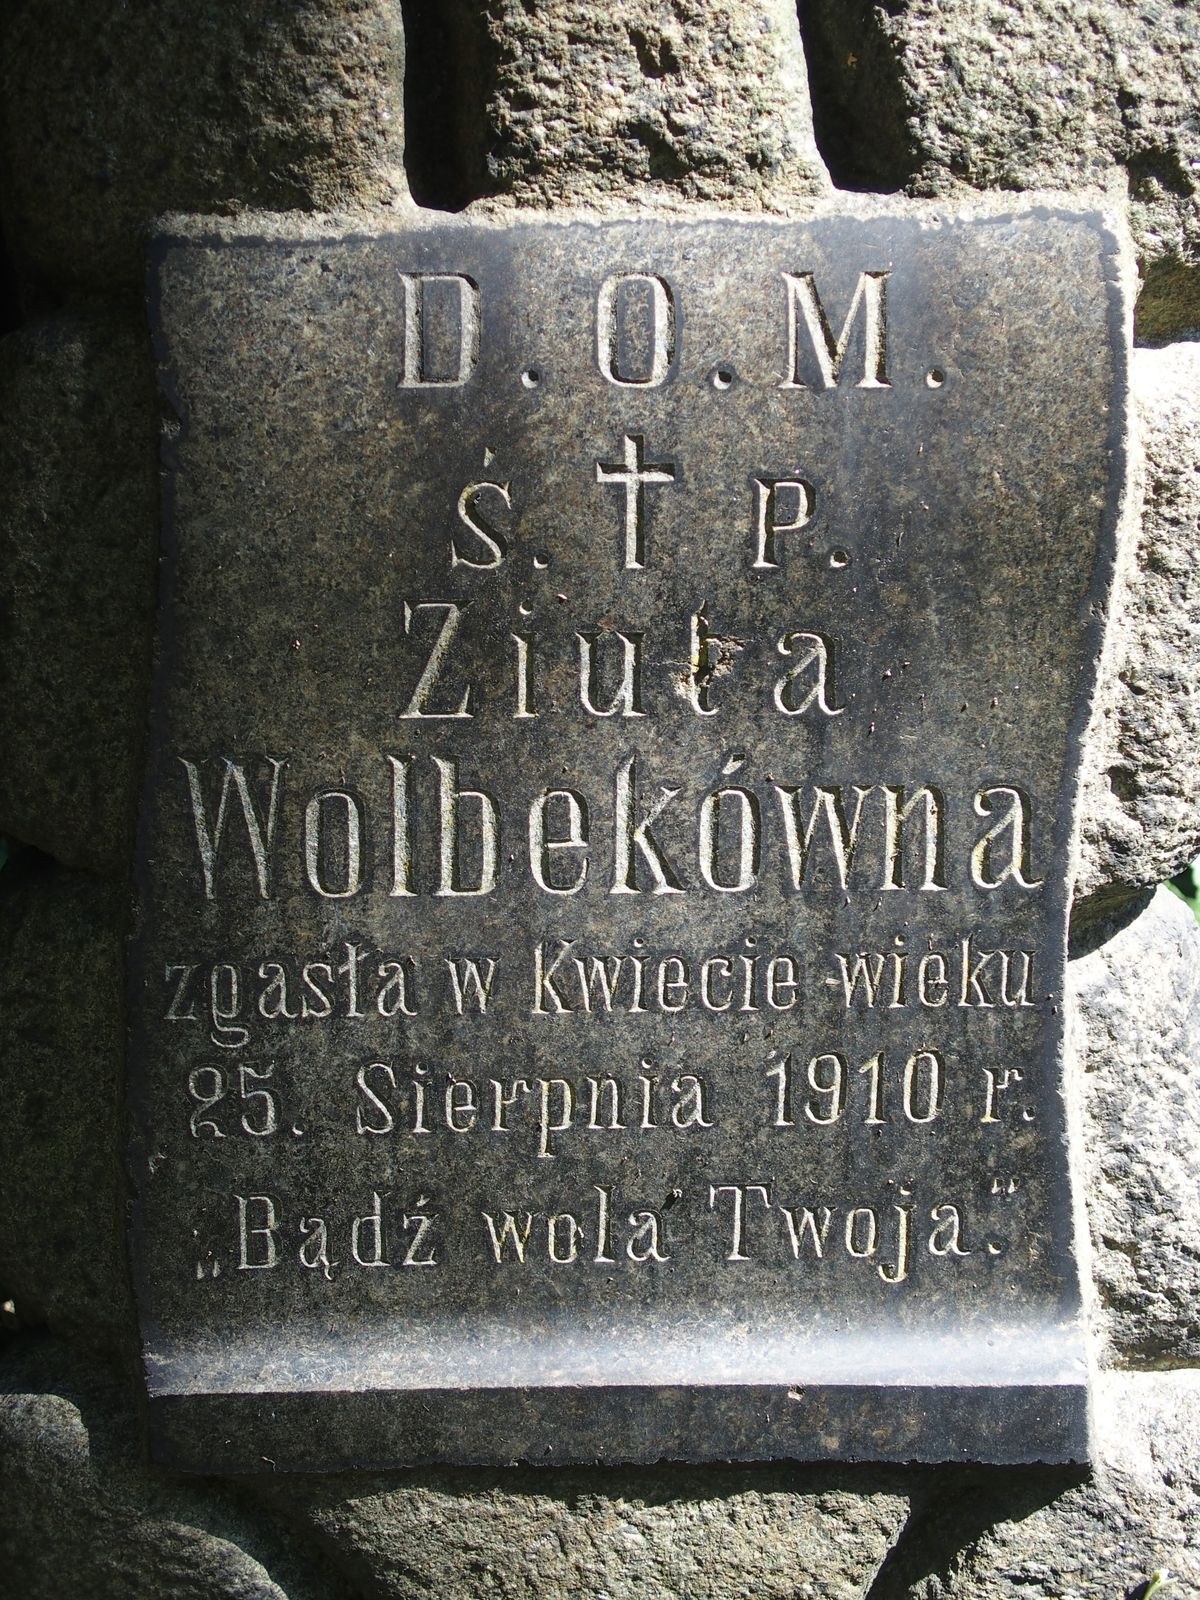 Inscription from the tombstone of Ziuta Wolbekówna